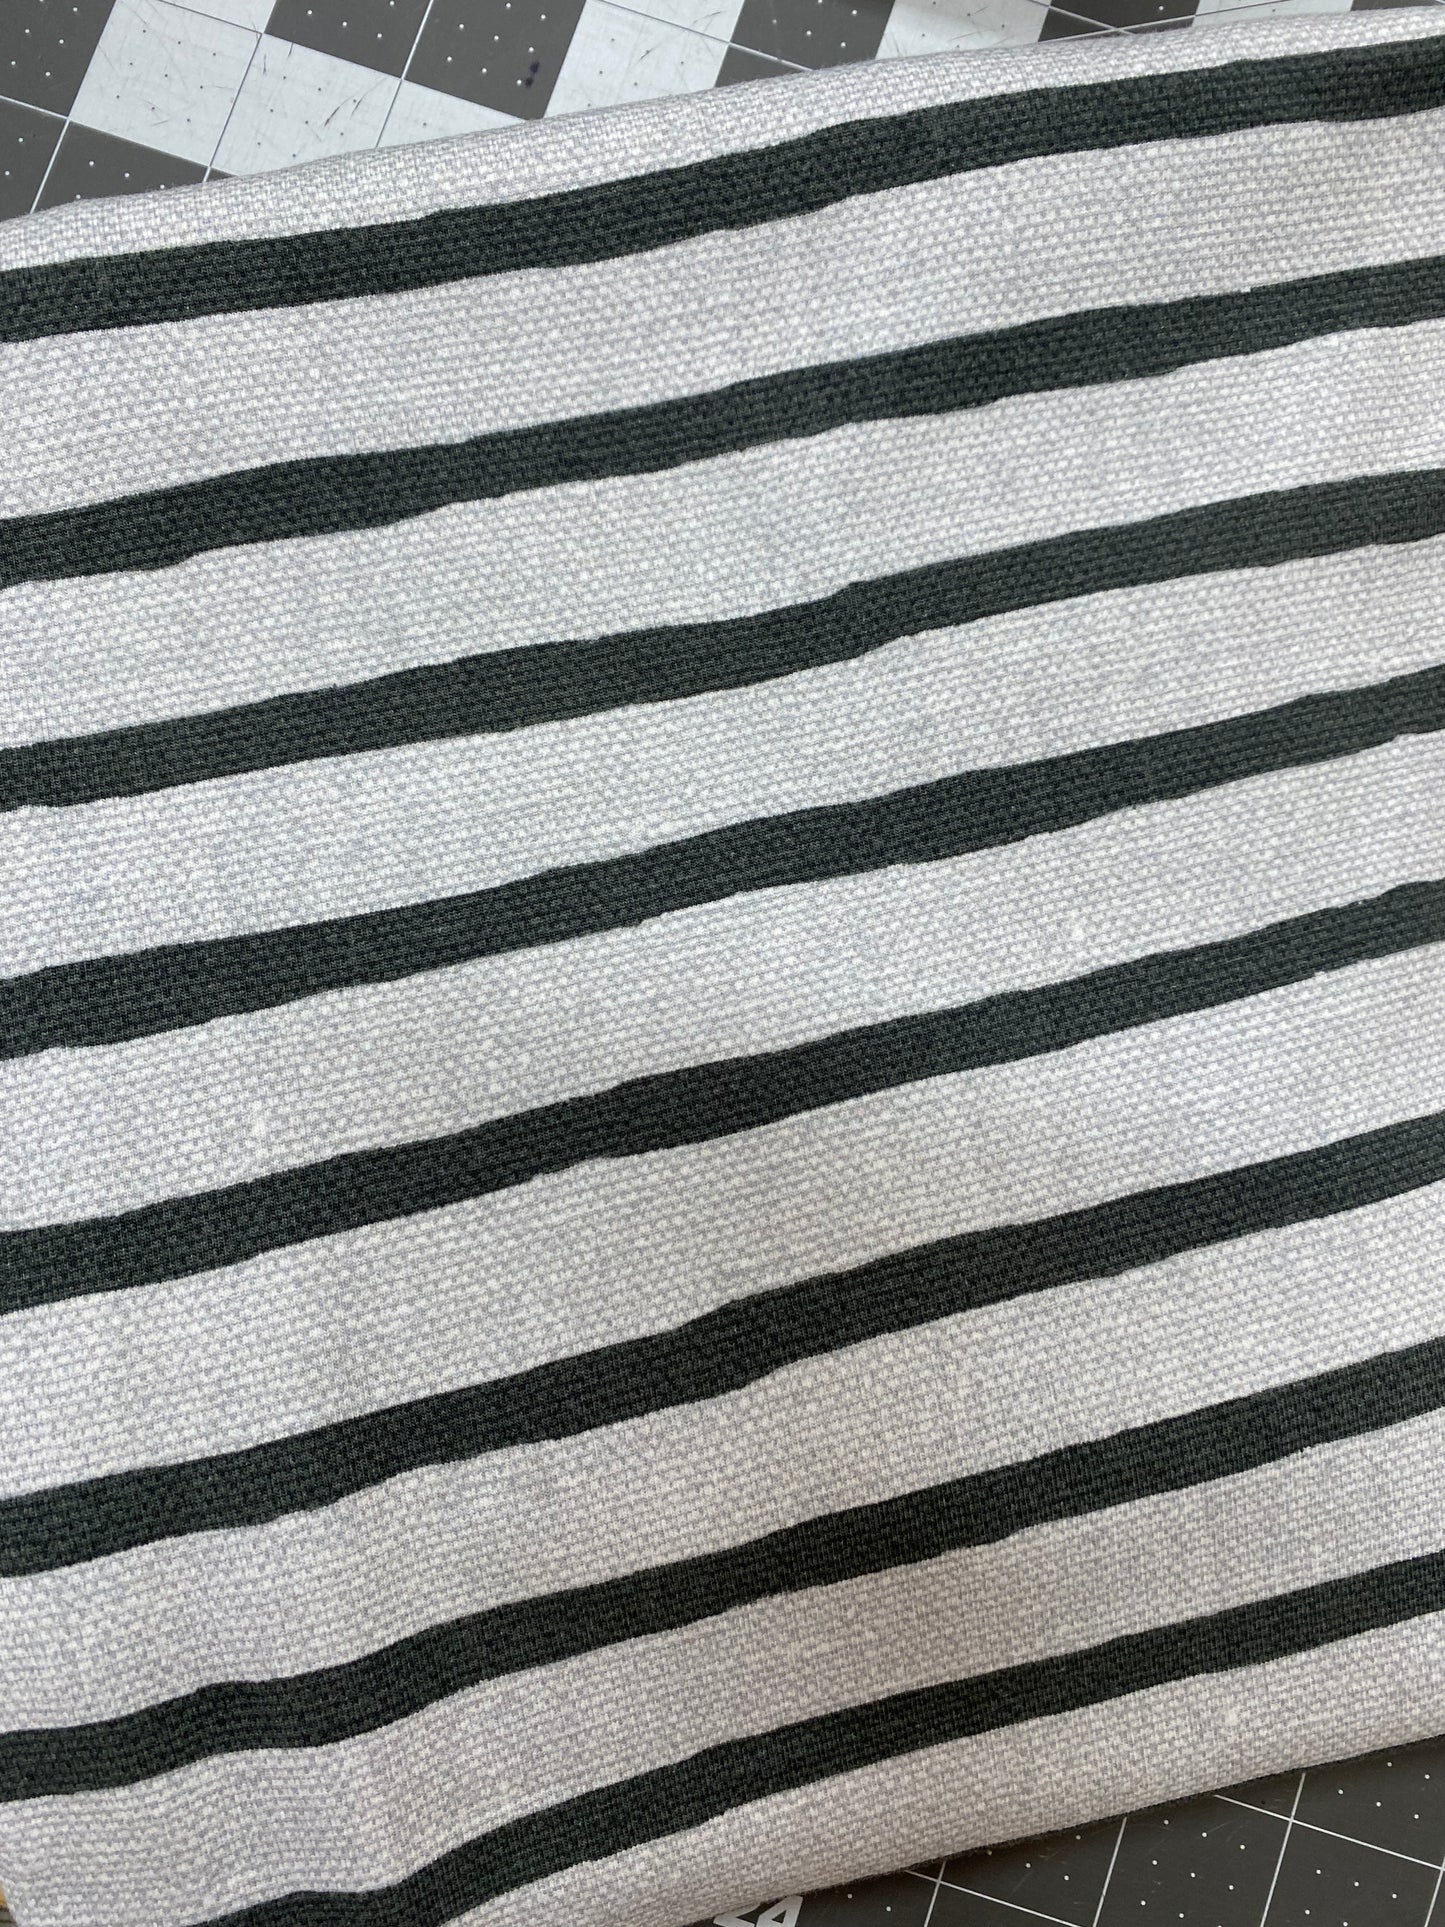 Charcoal and Cadet Burlap Stripes  - Organic Cotton Spandex